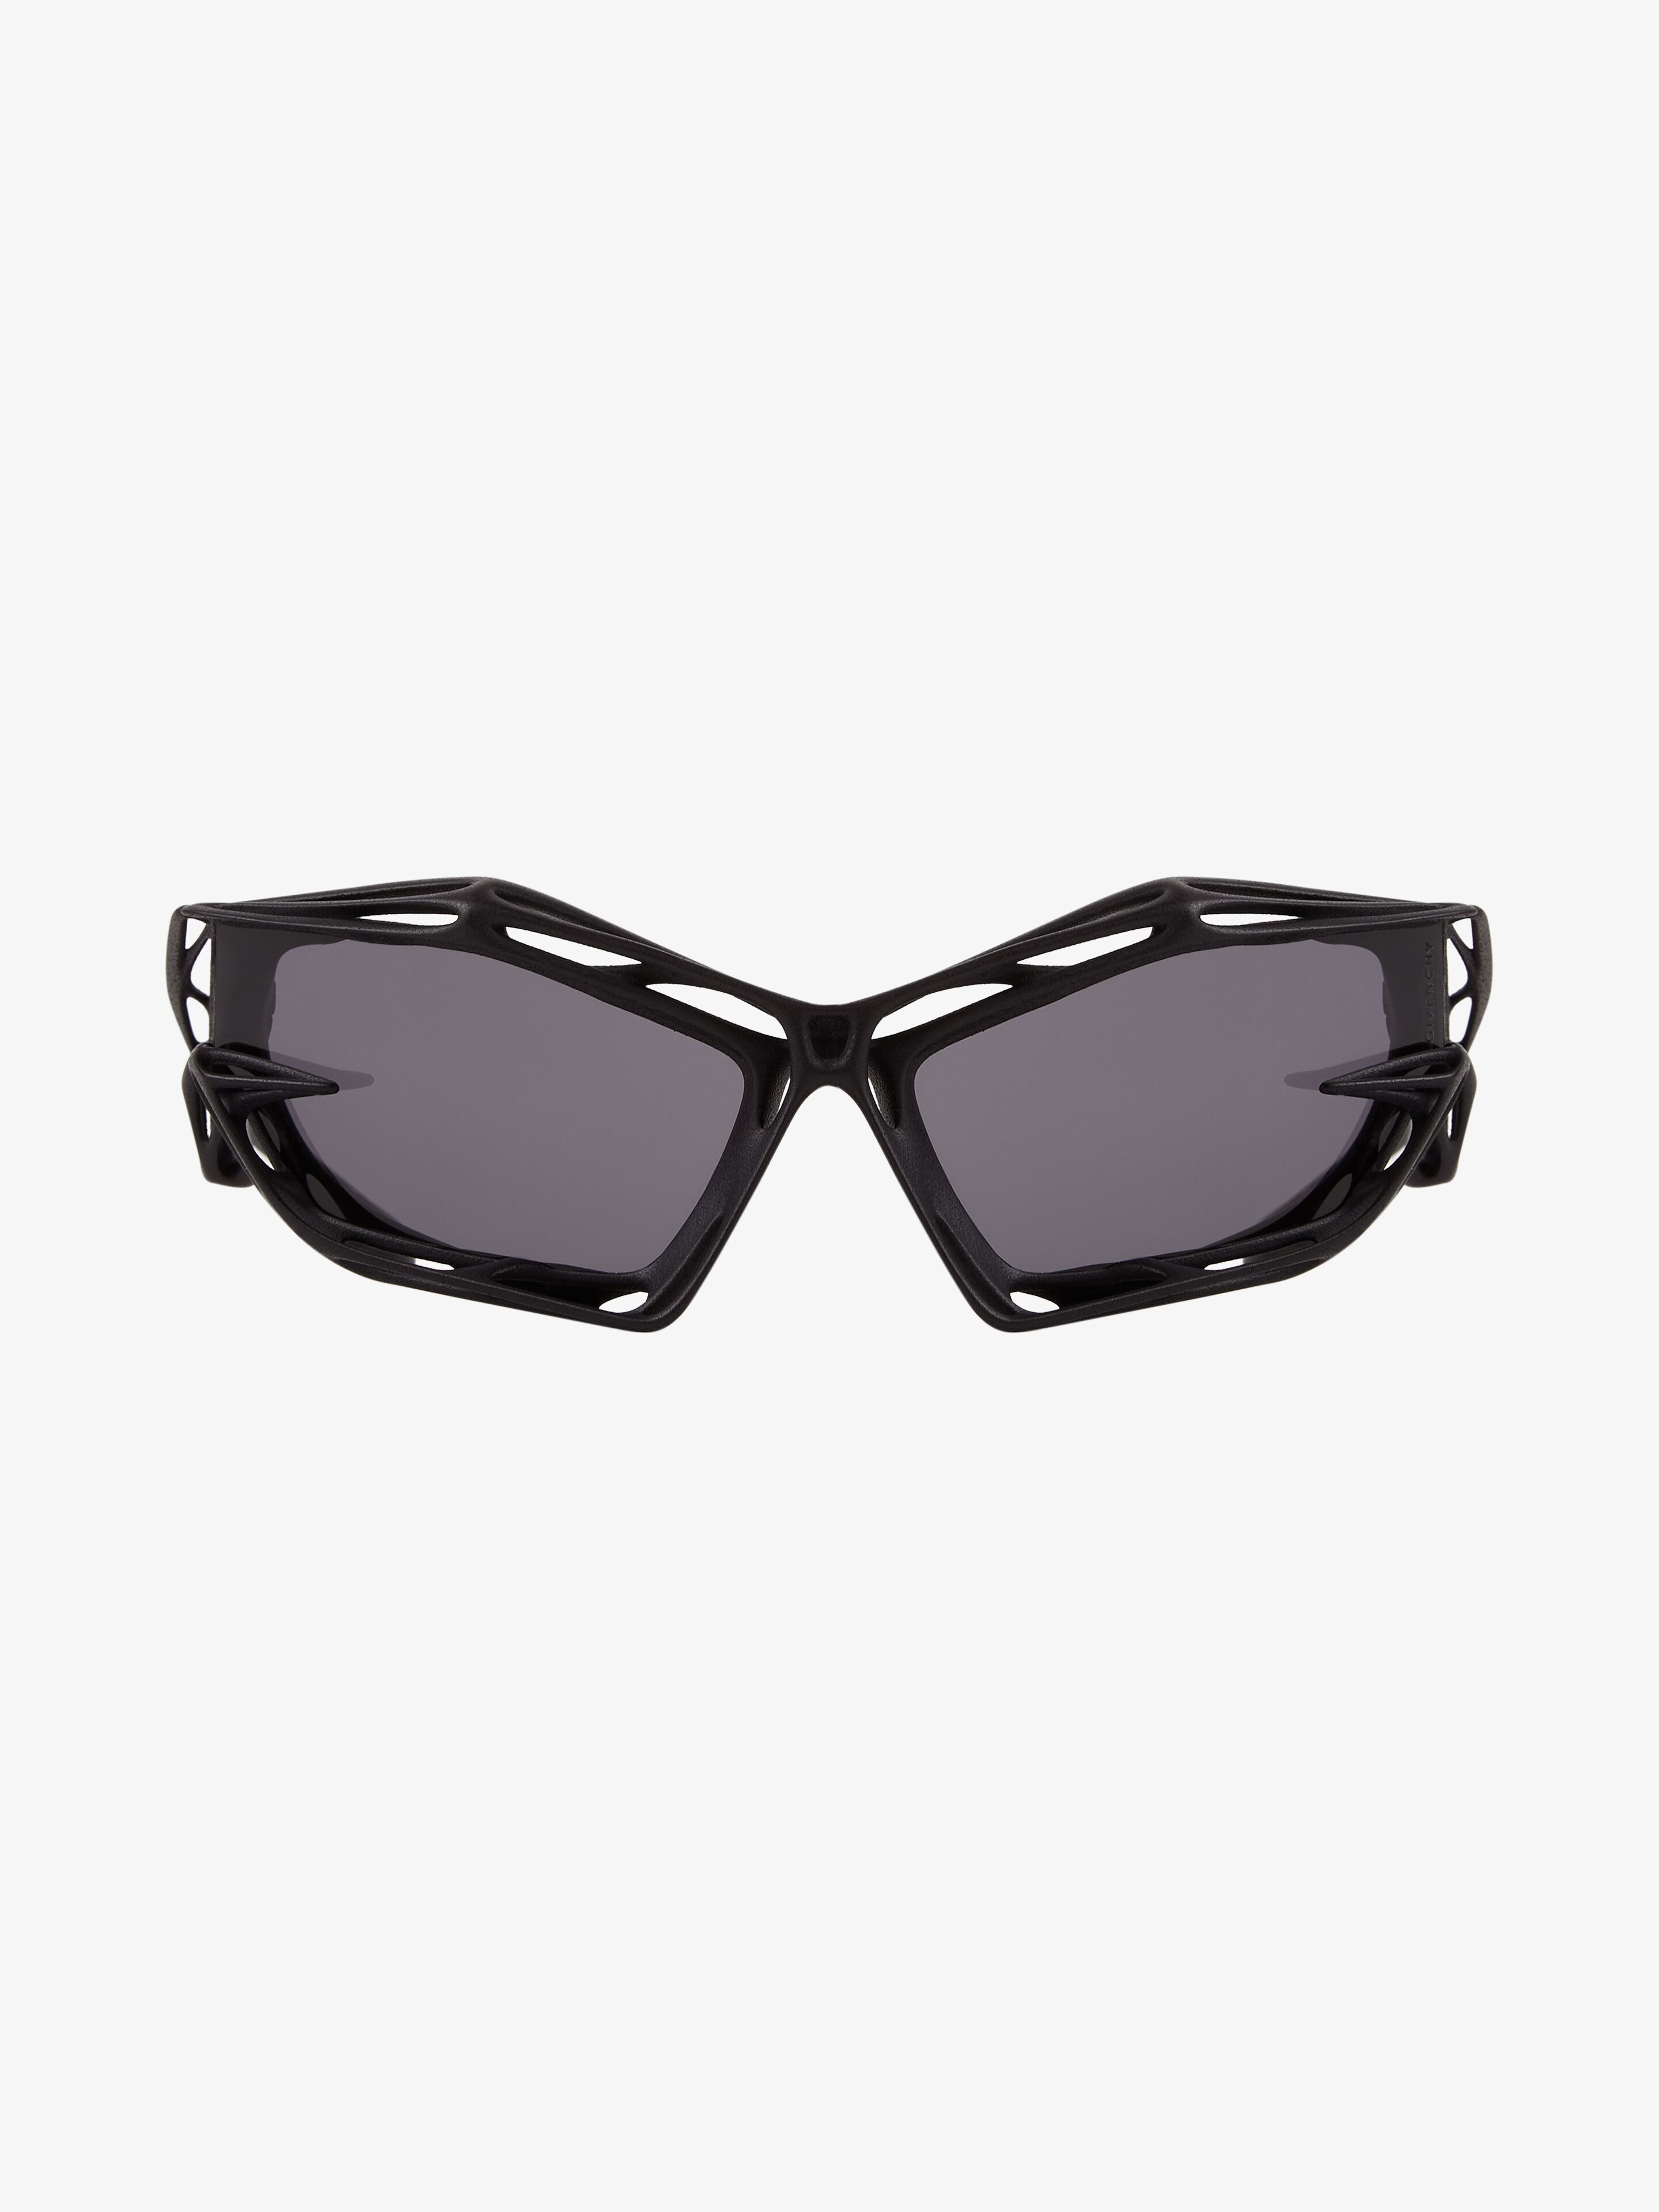 Giv Cut Cage unisex sunglasses in nylon - black